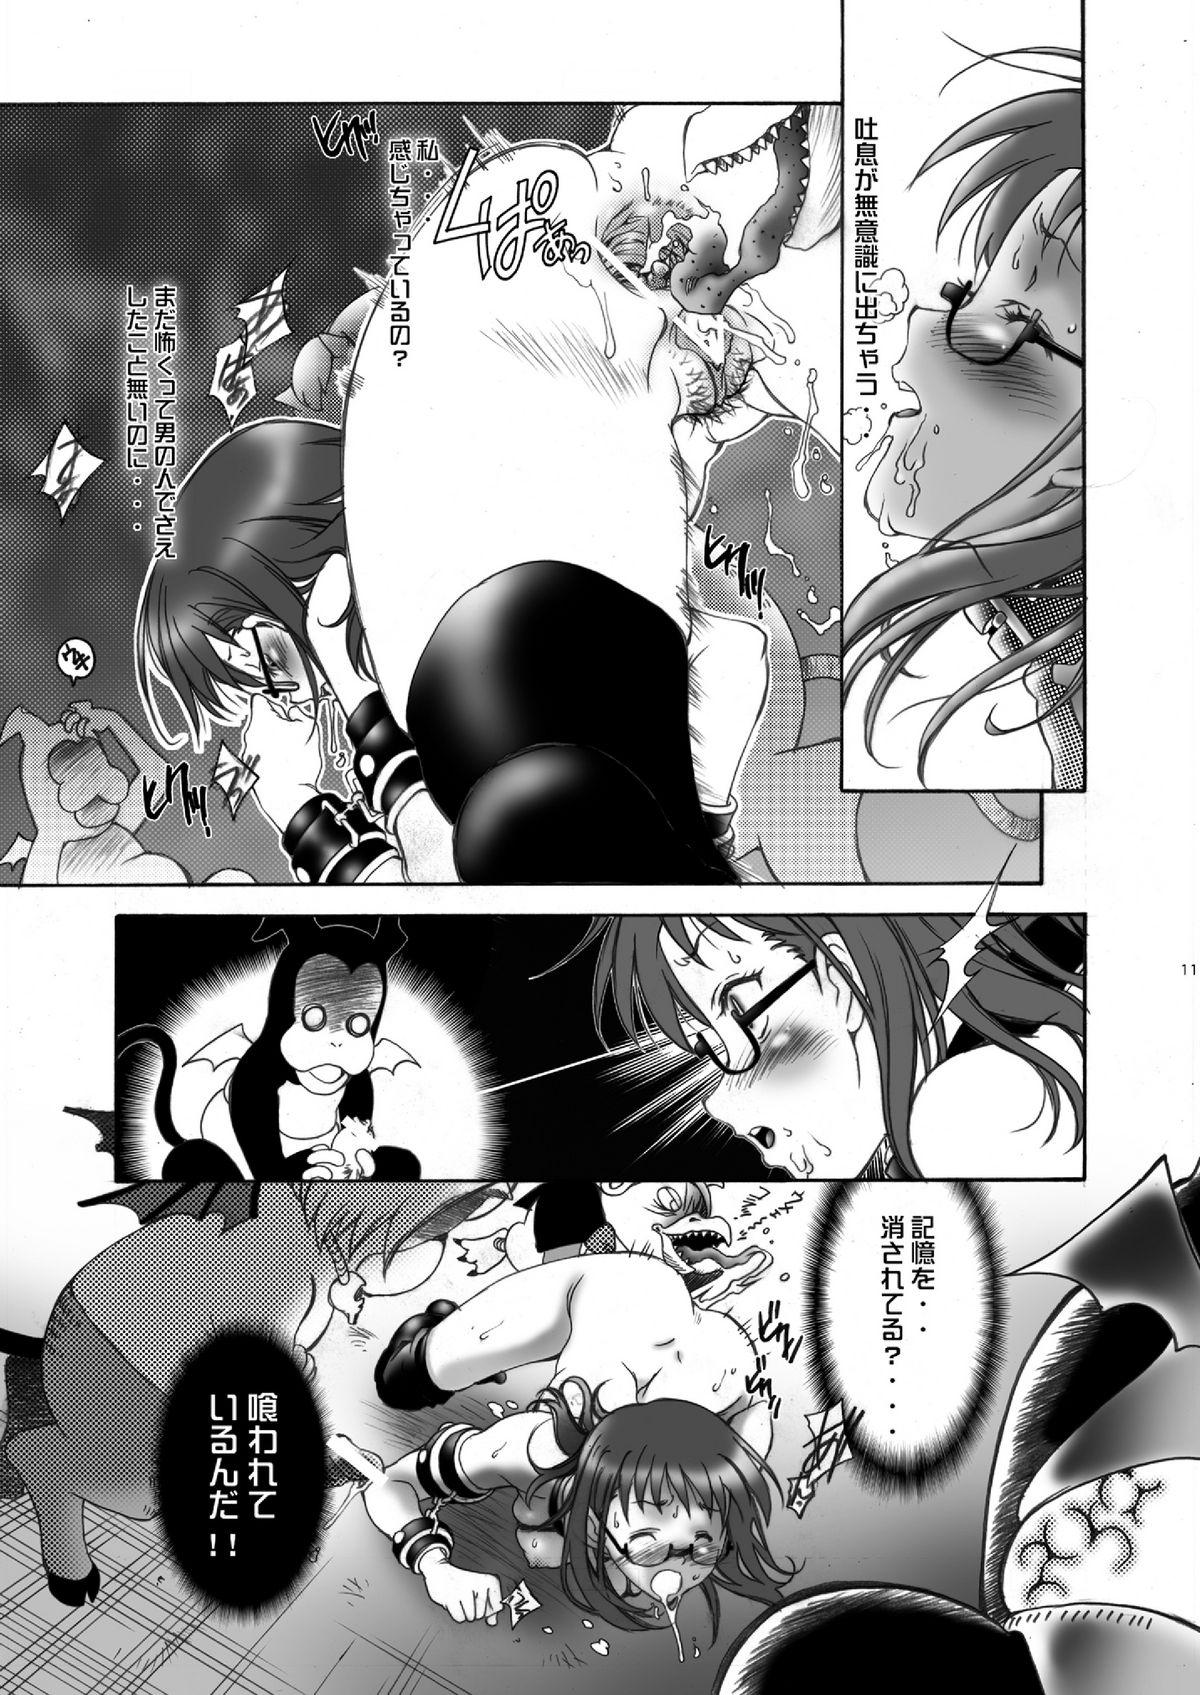 Groupfuck Ittemasuyo! Saku-chan. - Yondemasuyo azazel-san Classroom - Page 11